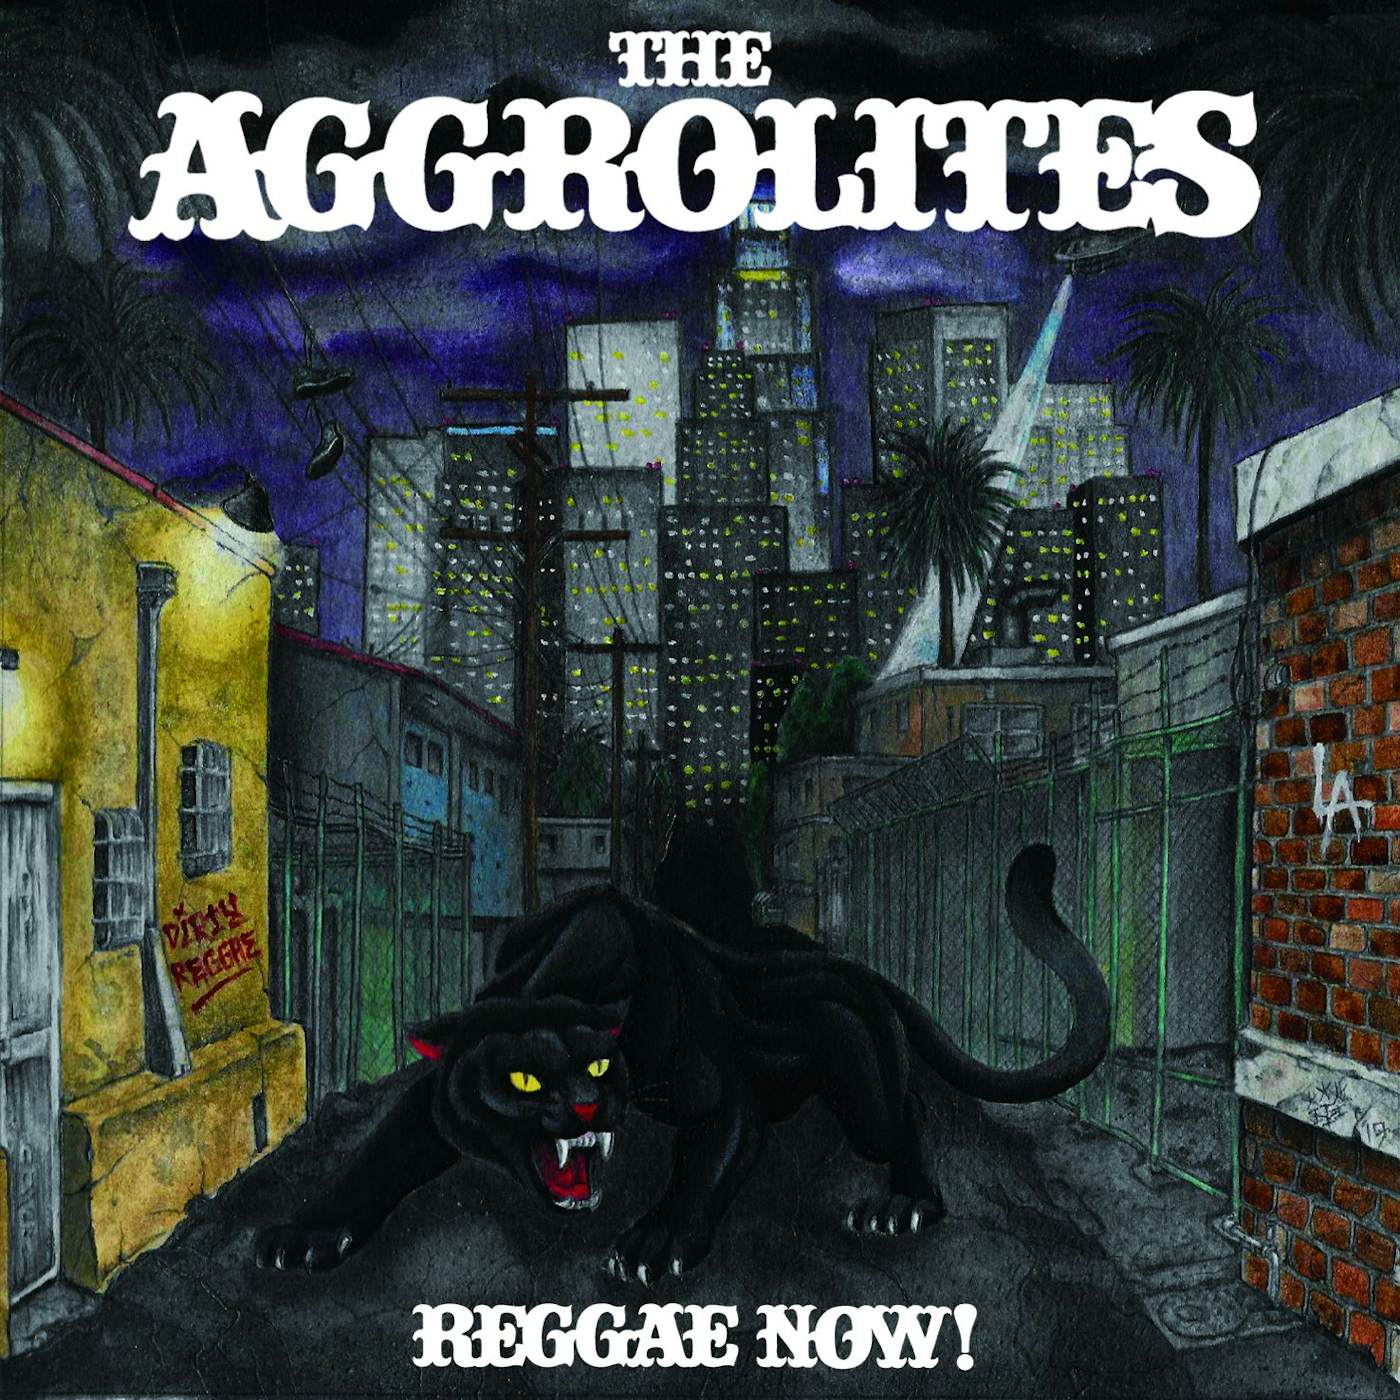 The Aggrolites - Reggae Now! LP / CD (Vinyl)